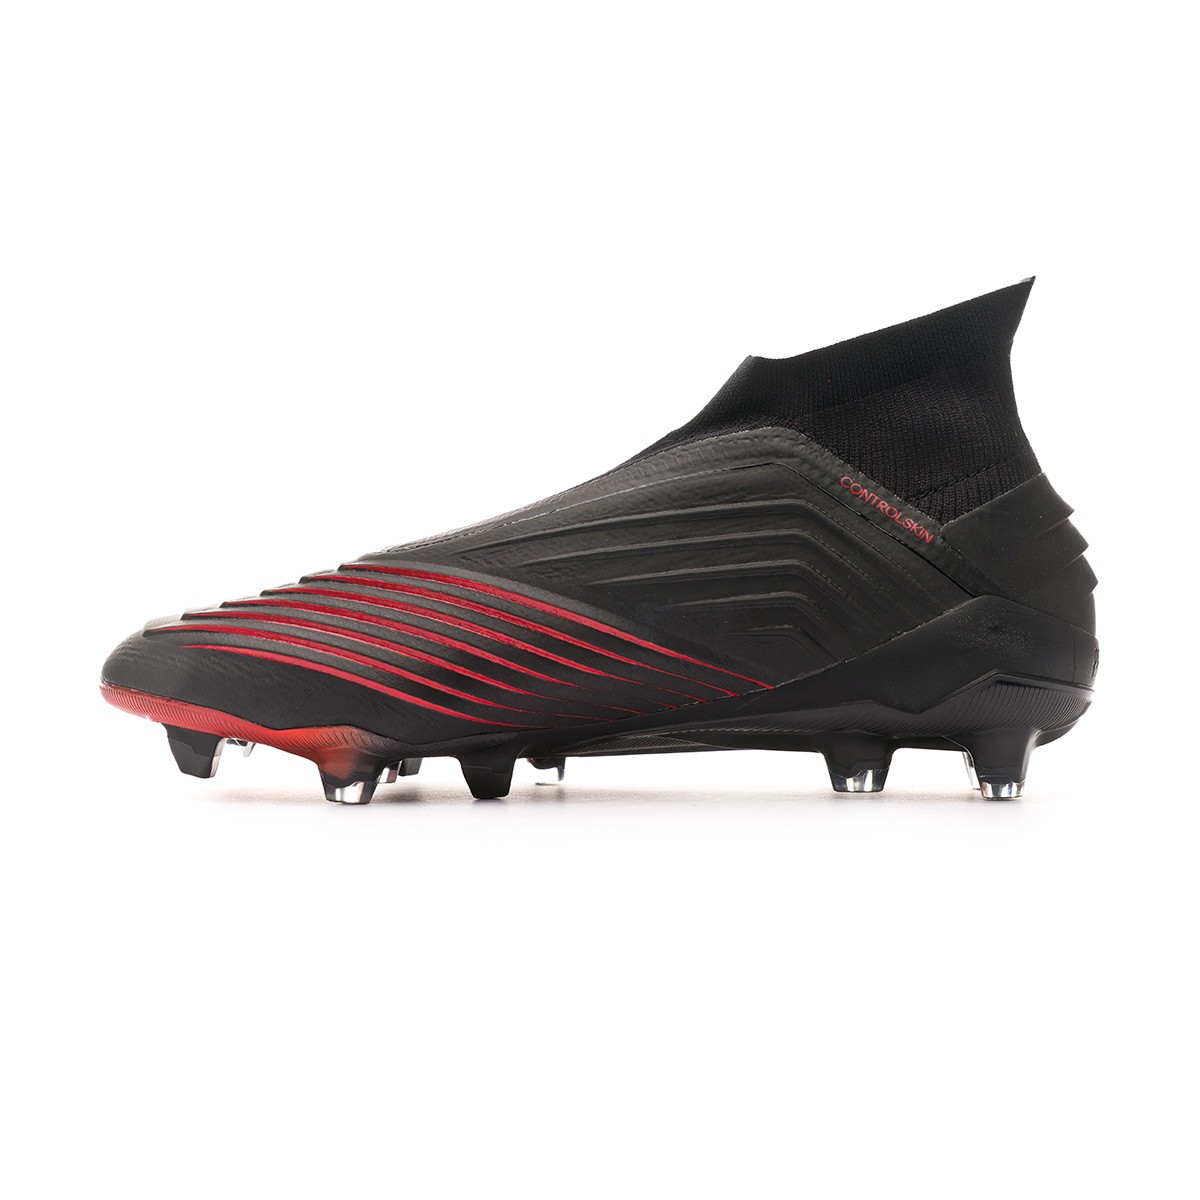 Bota de fútbol adidas Predator 19+ FG Core black-Core black-Active red -  Tienda de fútbol Fútbol Emotion